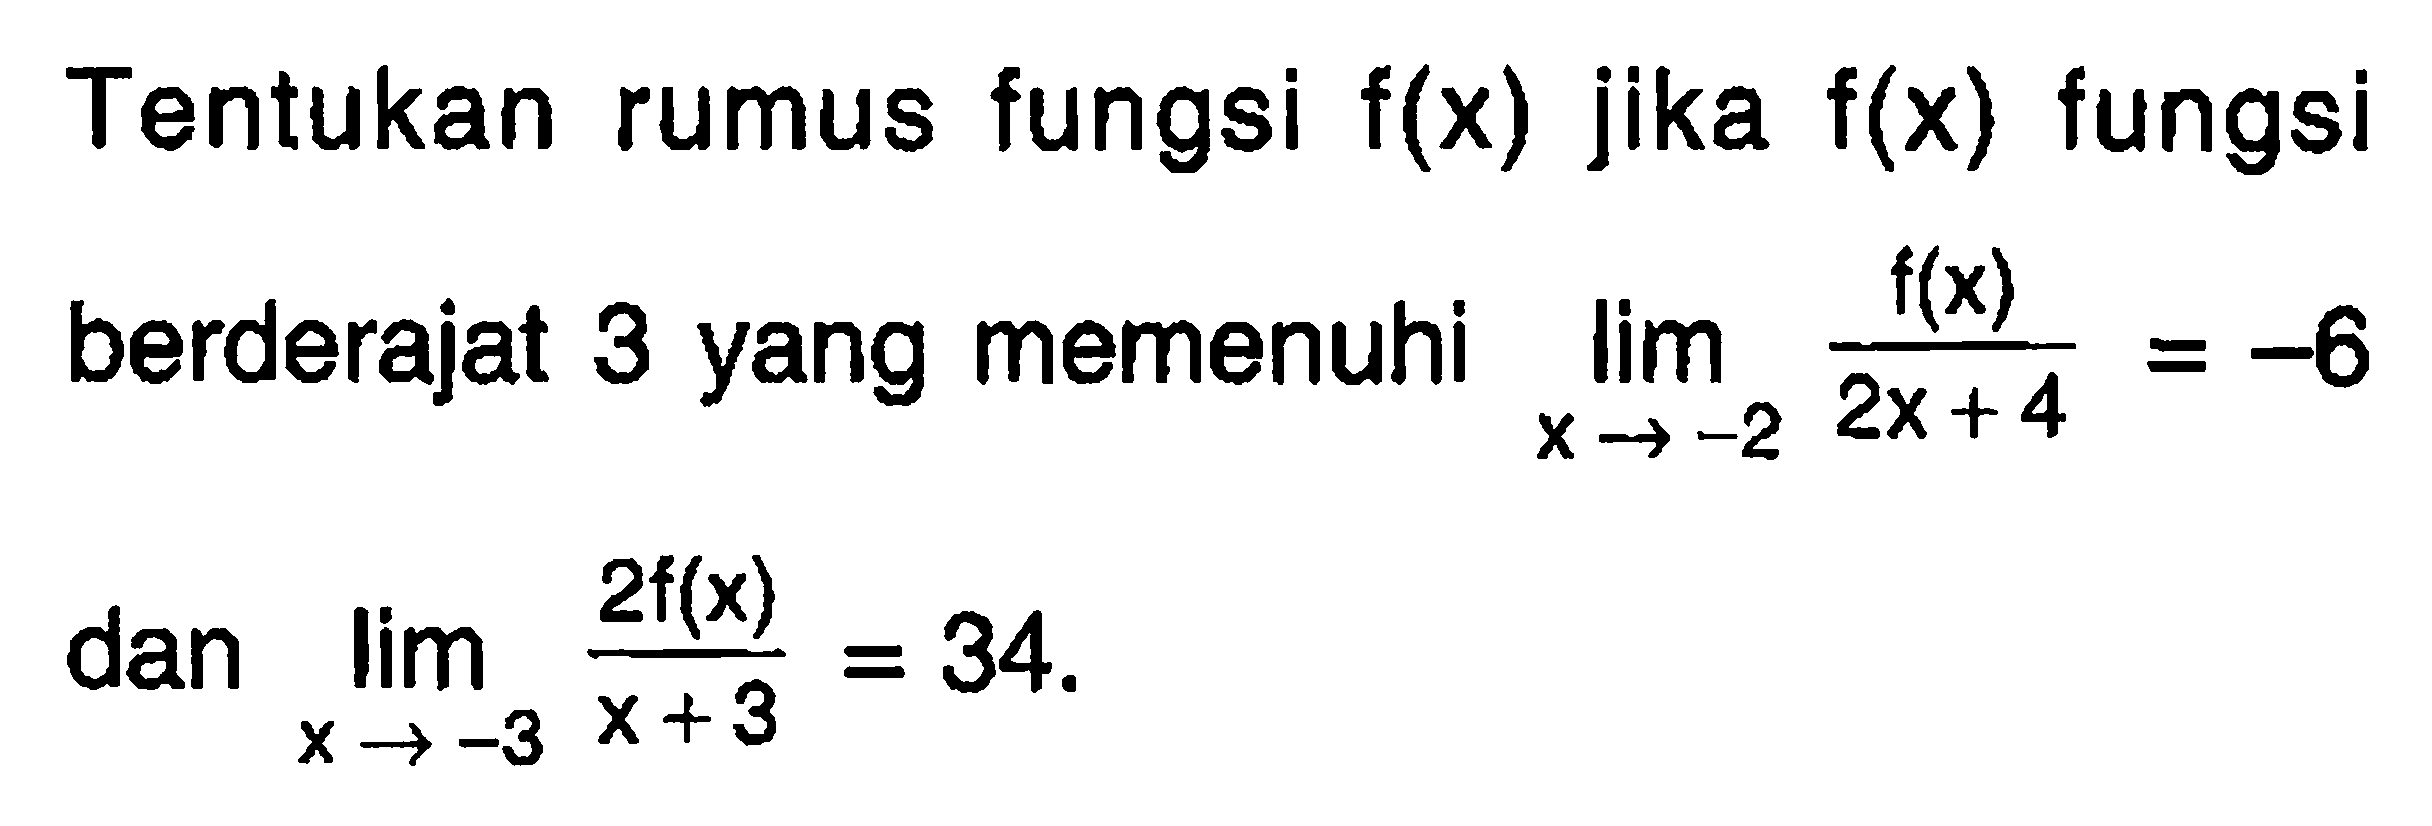 Tentukan rumus fungsi f(x) jika f(x) fungsi berderajat 3 yang memenuhi lim x ->-2 f(x)/(2x+4)=-6 dan lim x ->-3 2 f(x)/(x+3)=34 